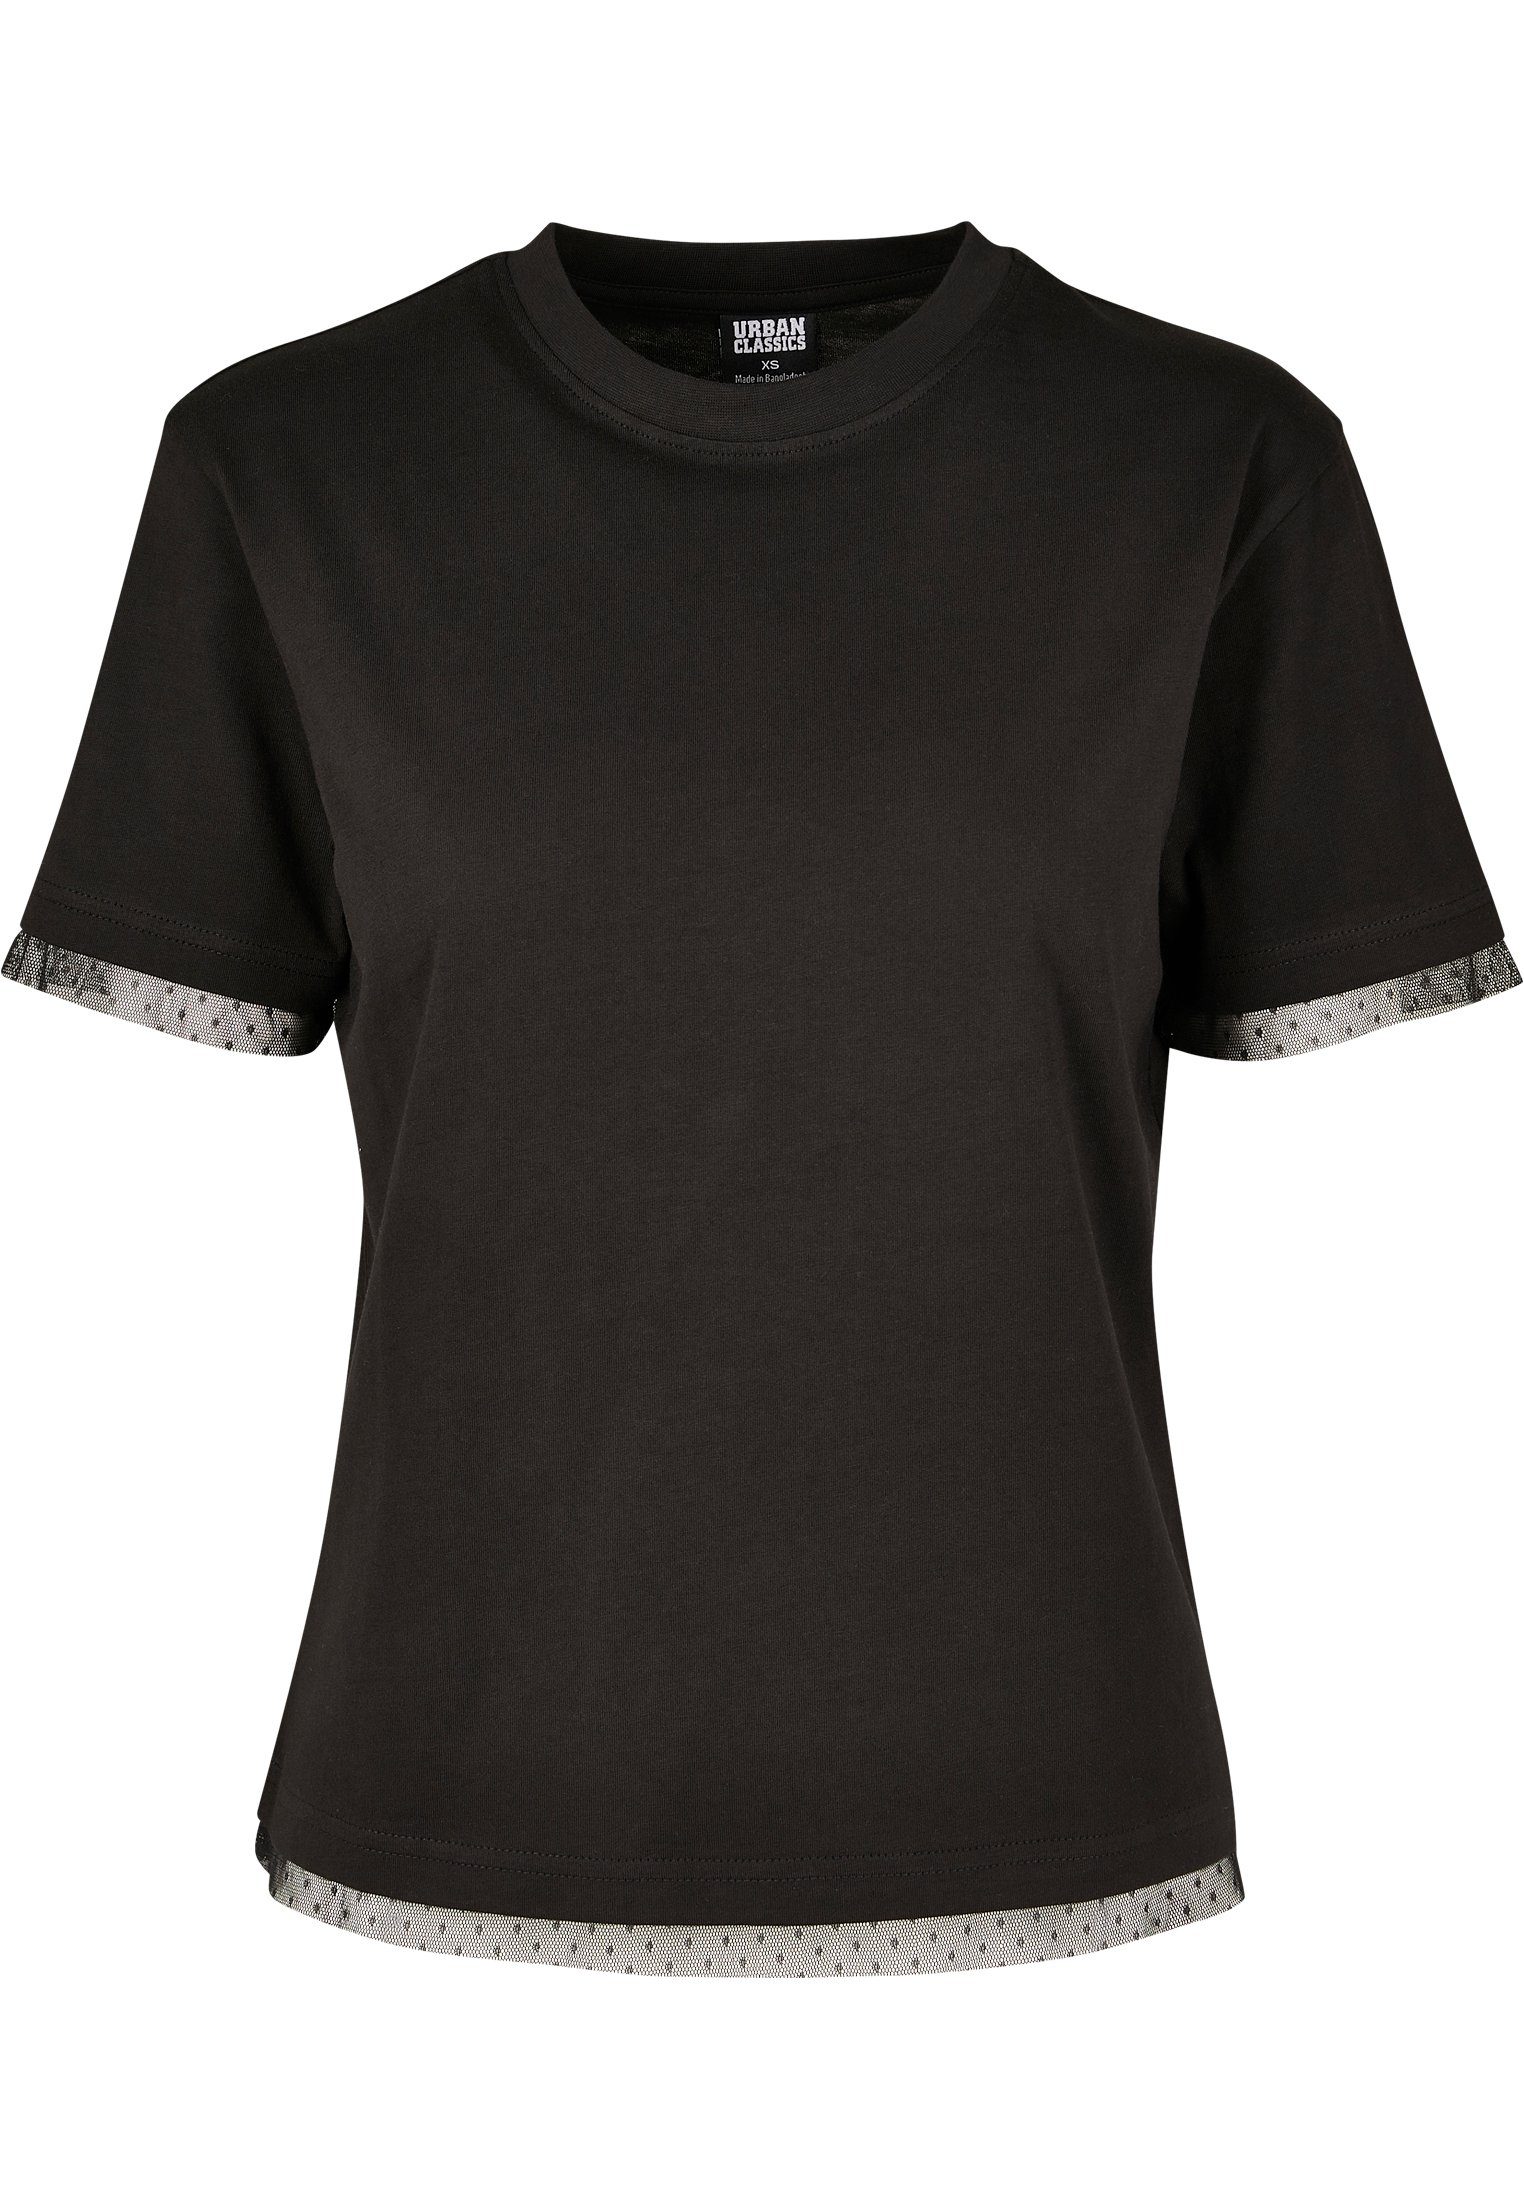 URBAN CLASSICS T-Shirt TB2800 black Lace Hem Boxy